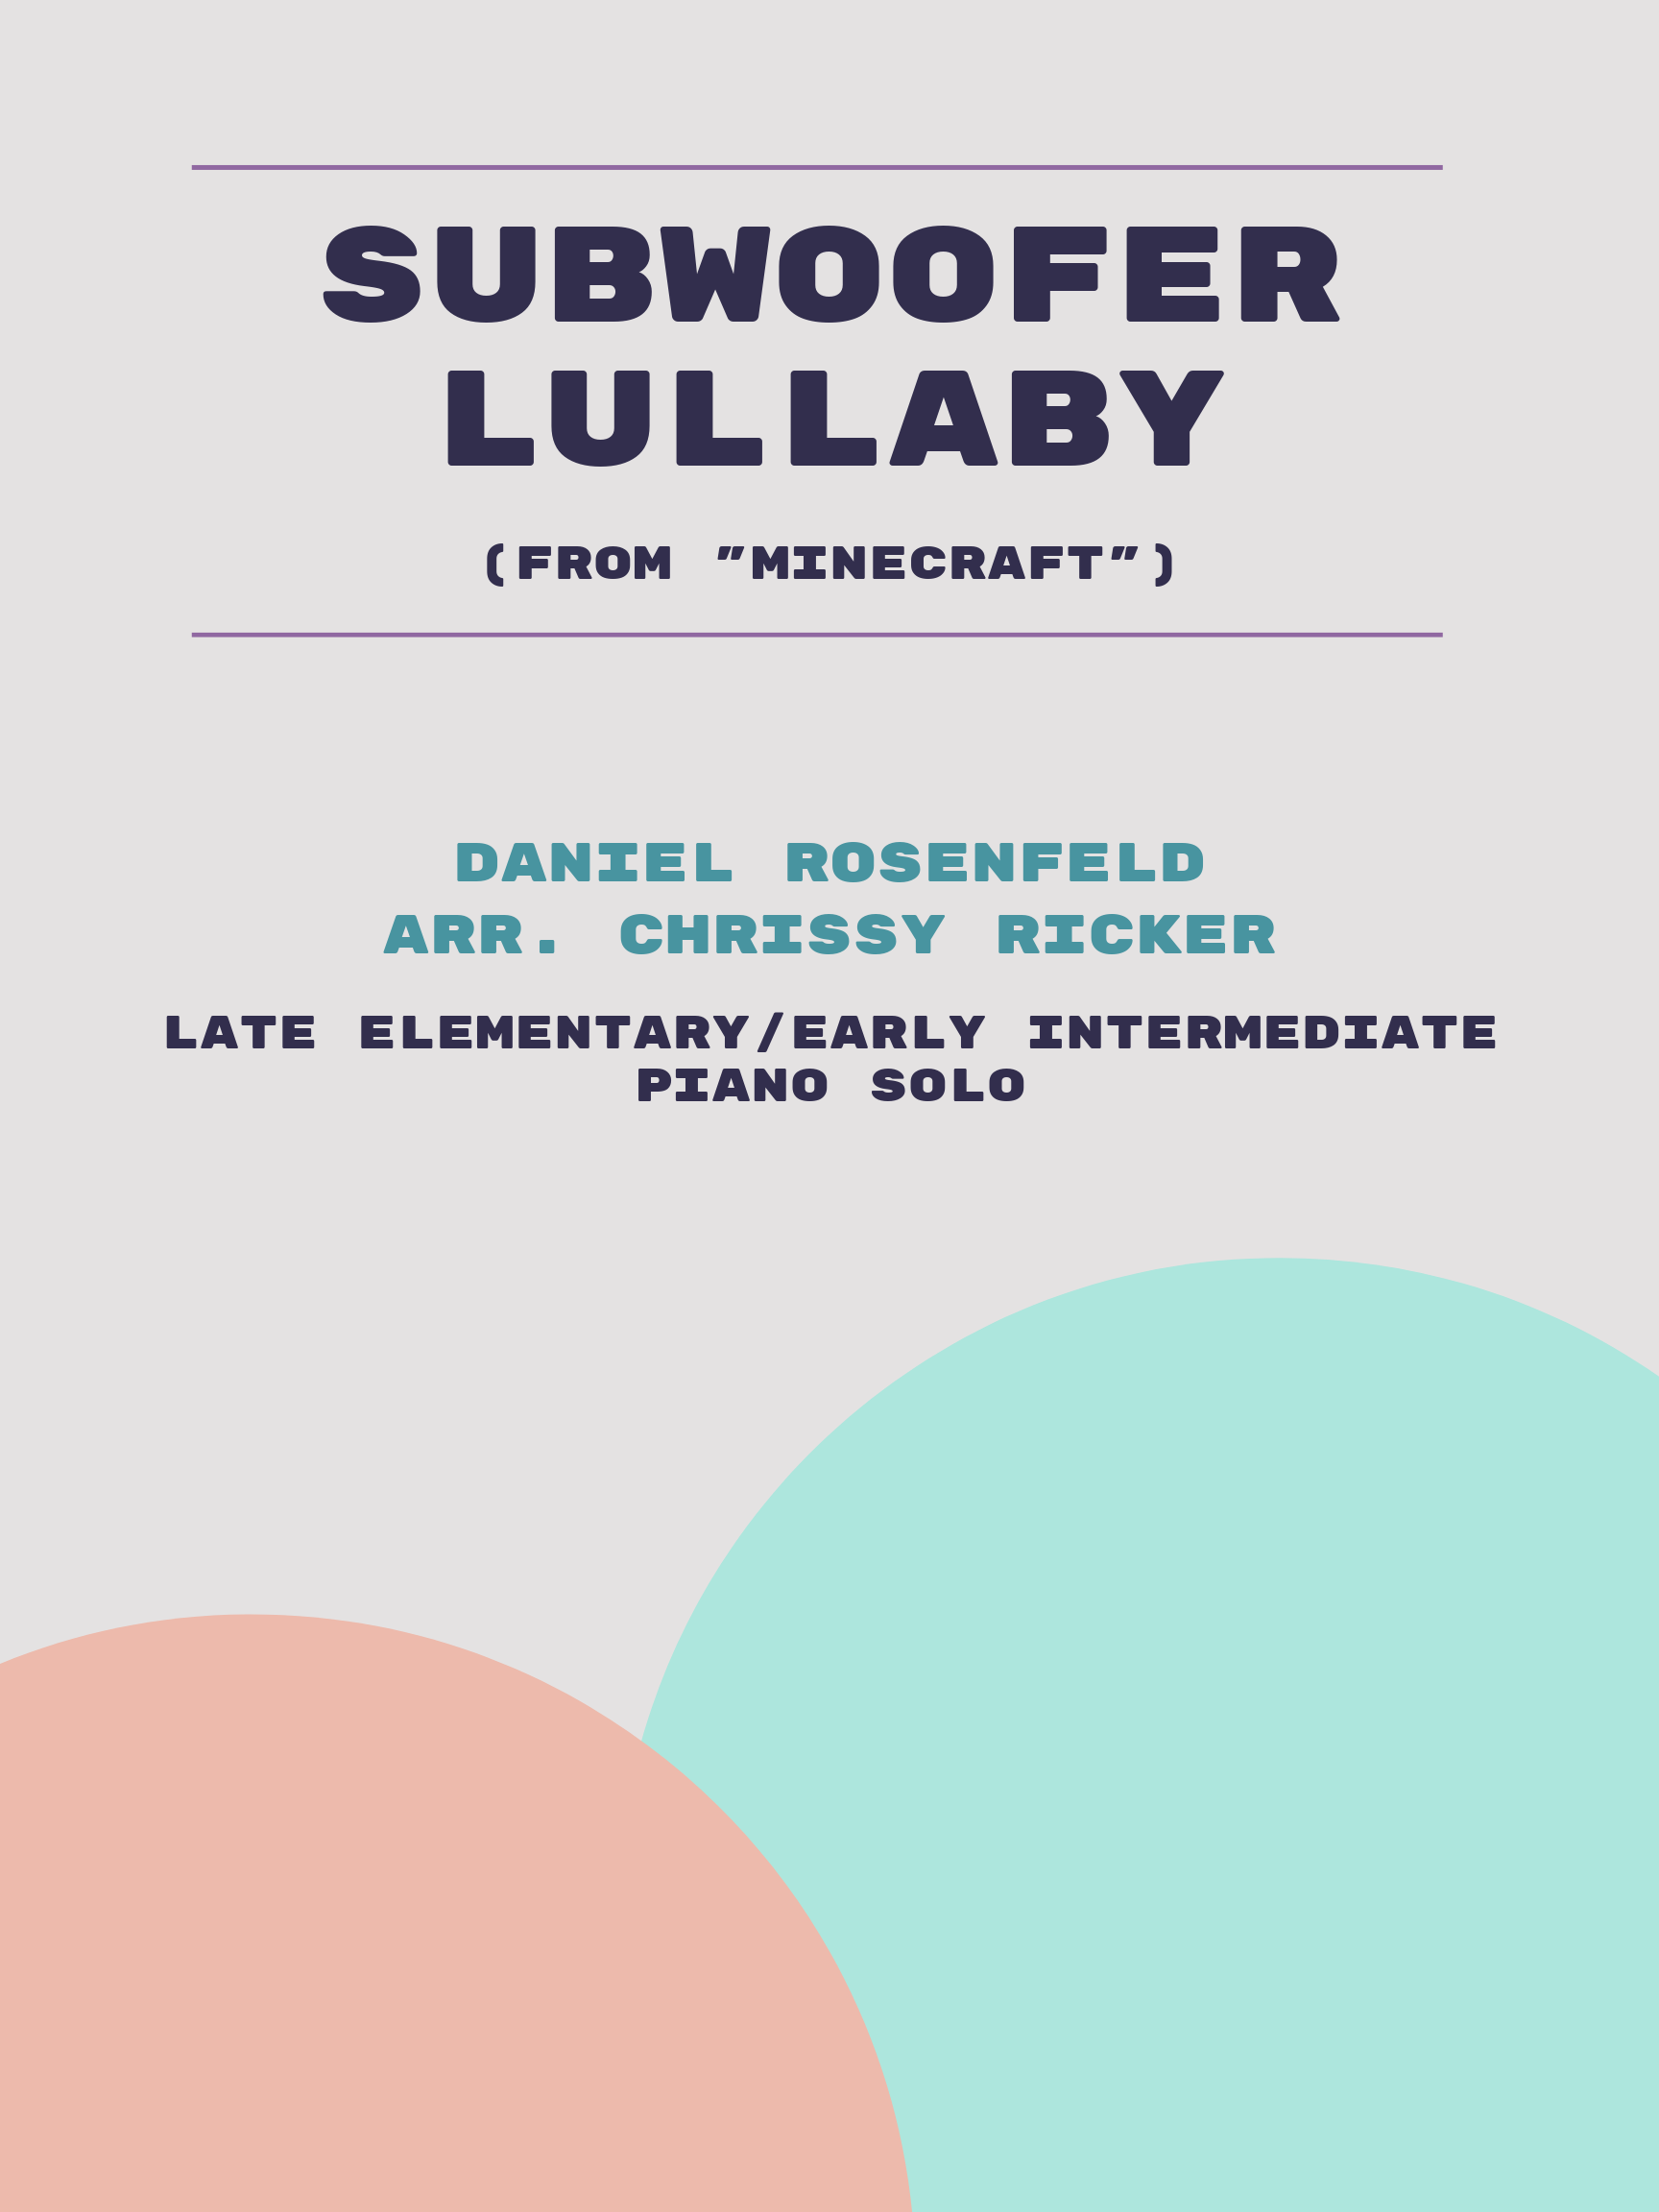 Subwoofer Lullaby by Daniel Rosenfeld